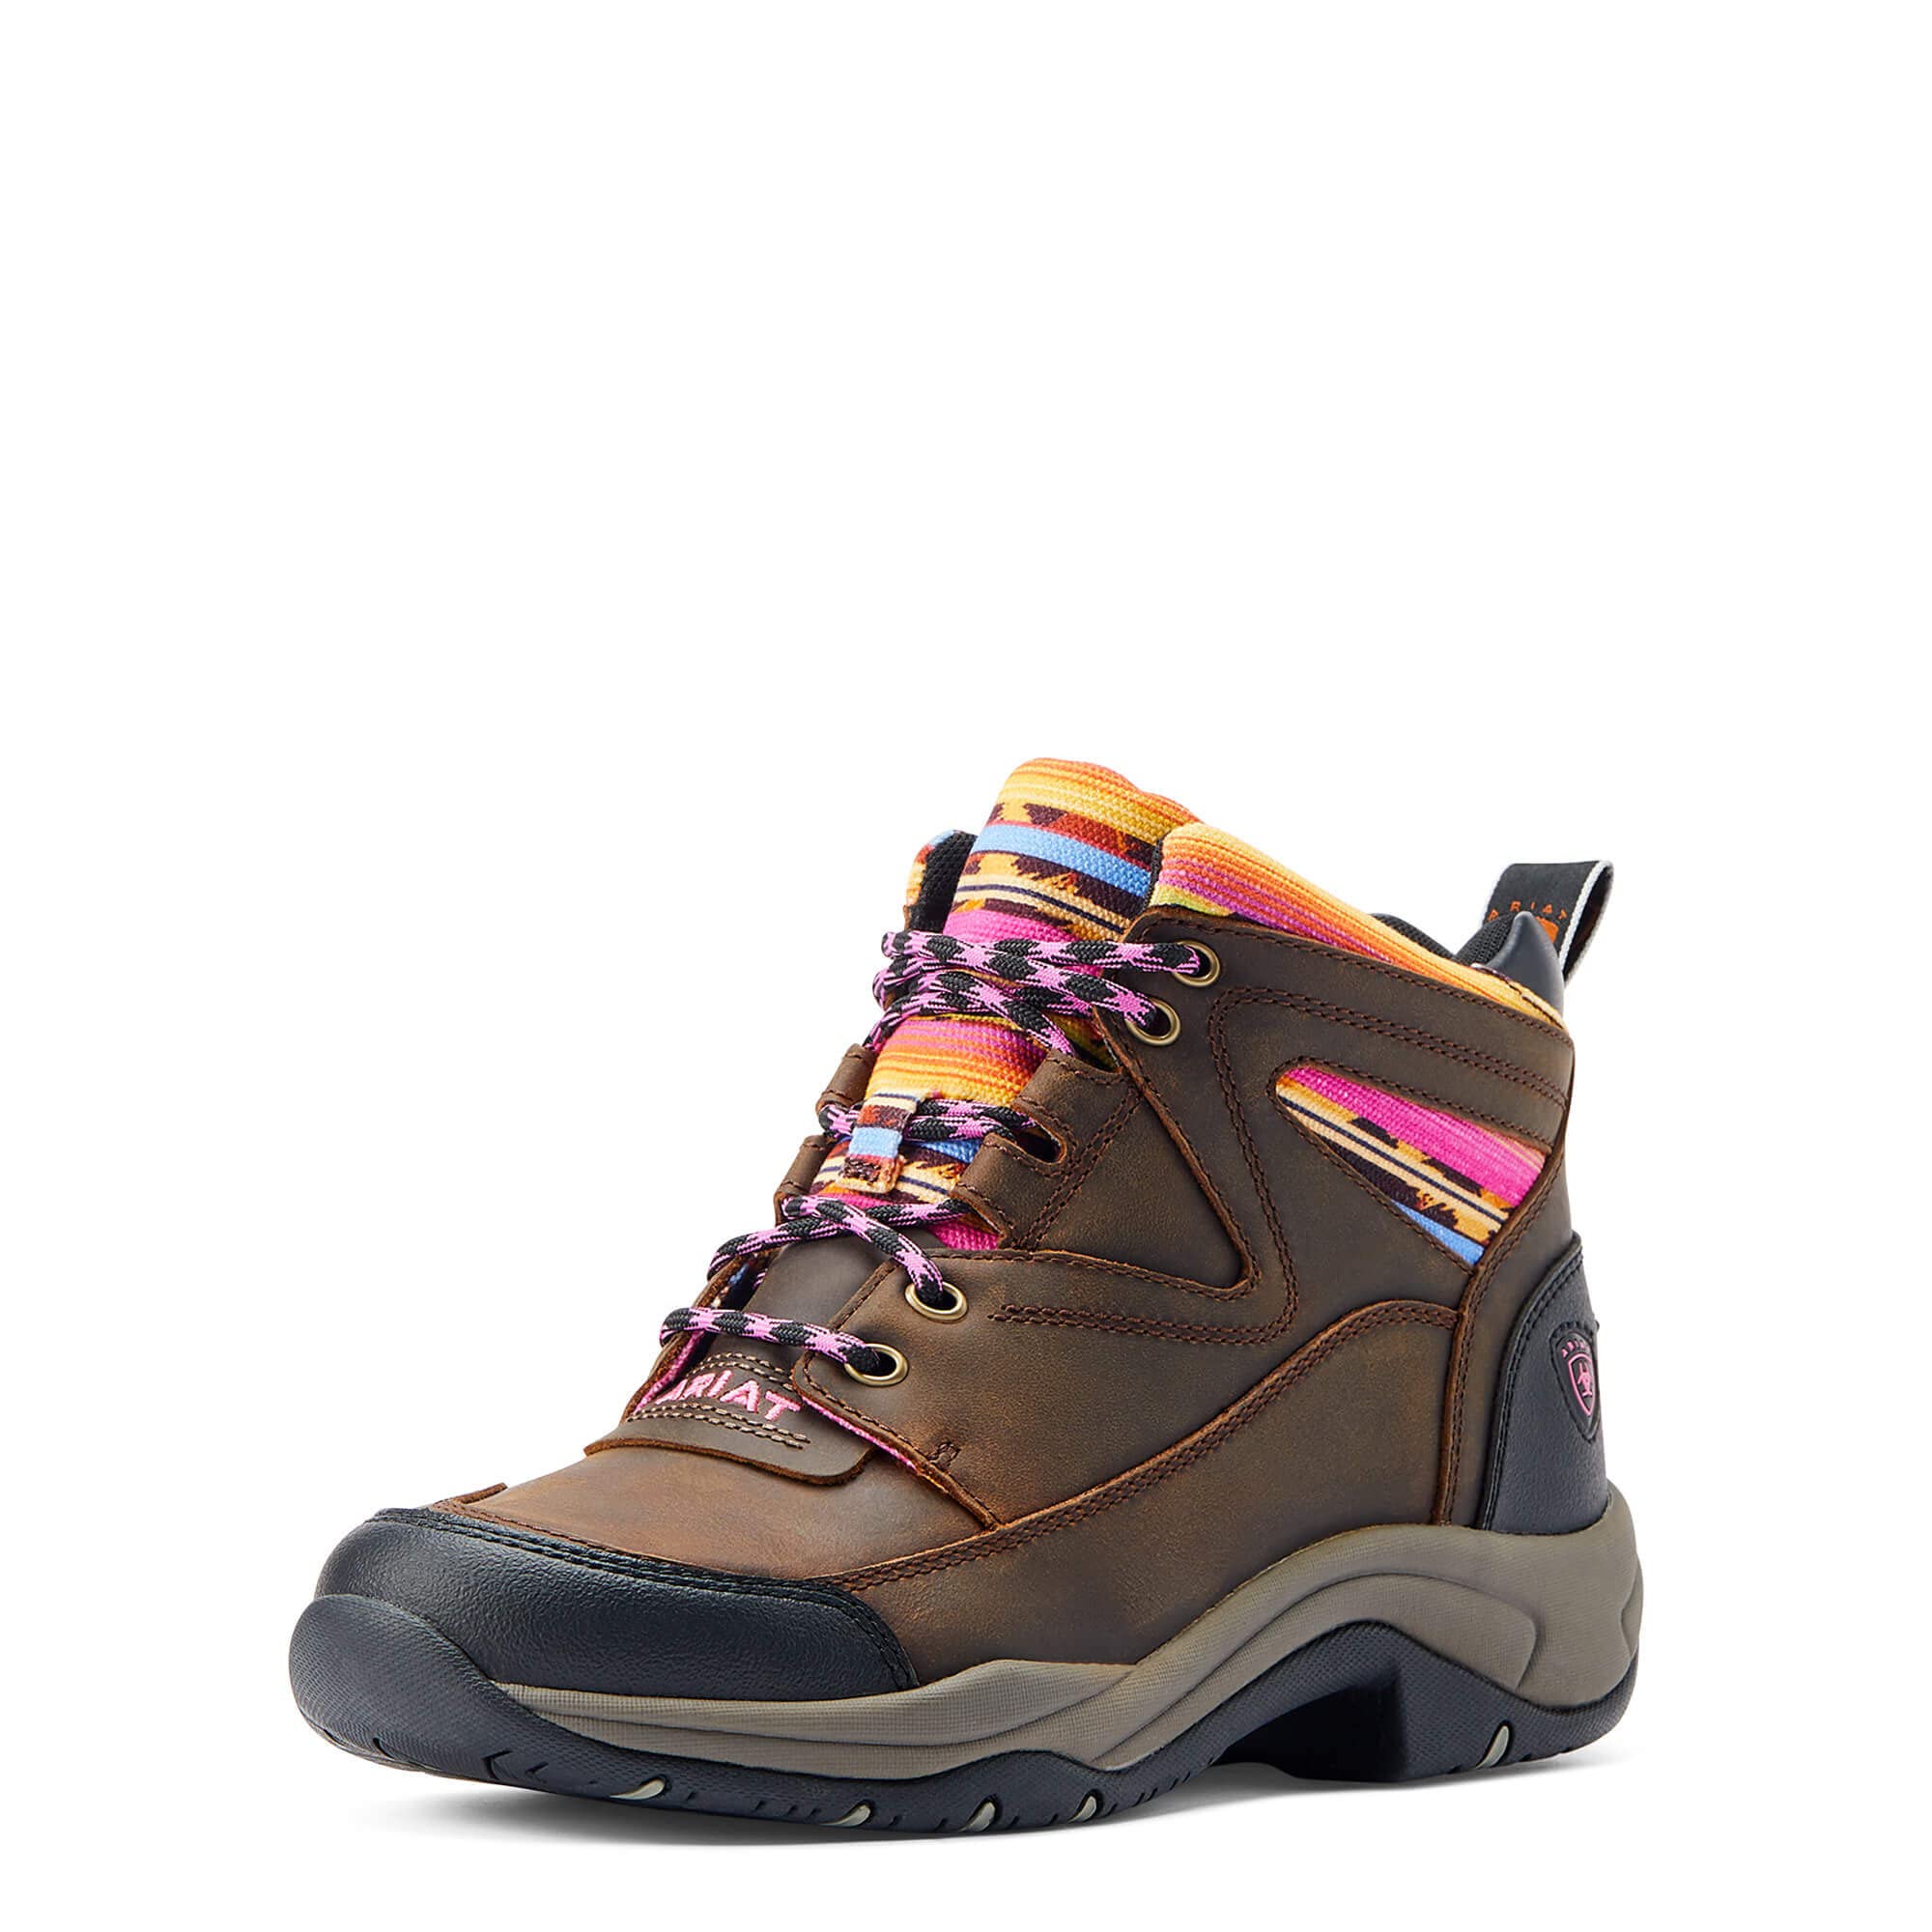 Ariat Women's Terrain Boot Hiking